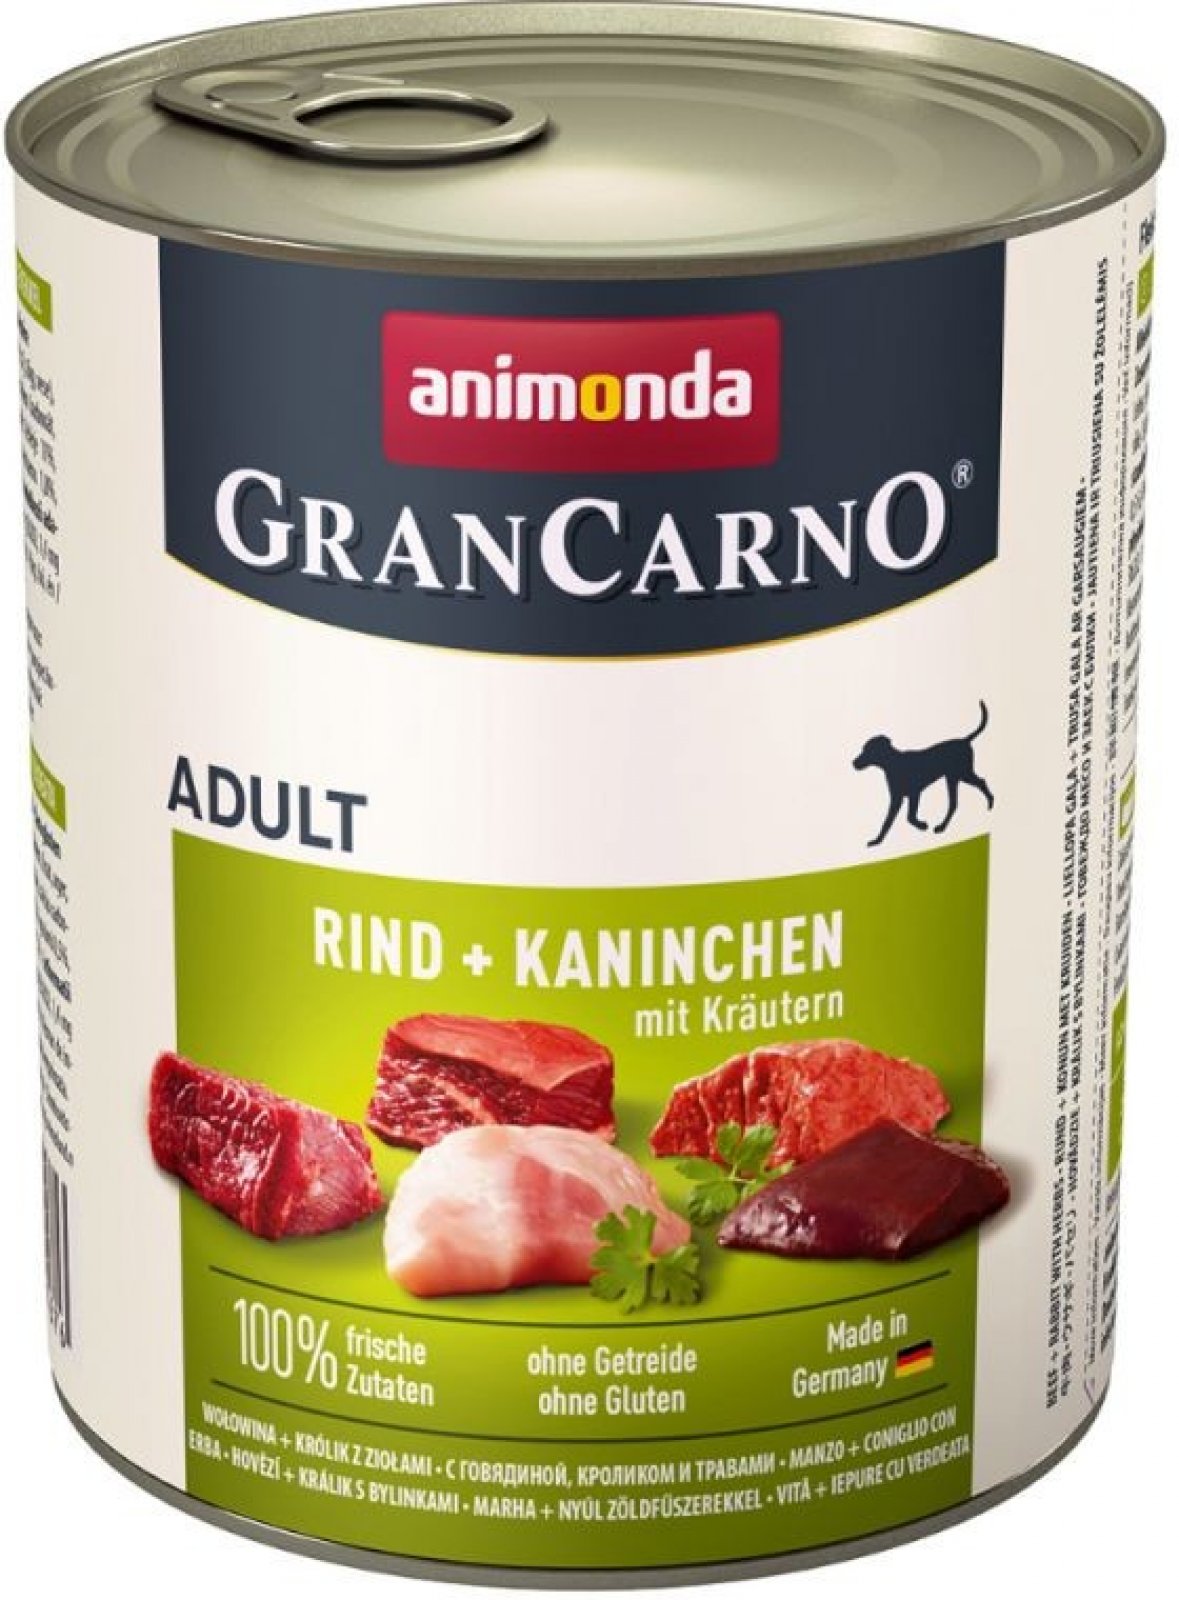 Animonda Gran Carno Adult Beef, Rabbit & Herbs 800g